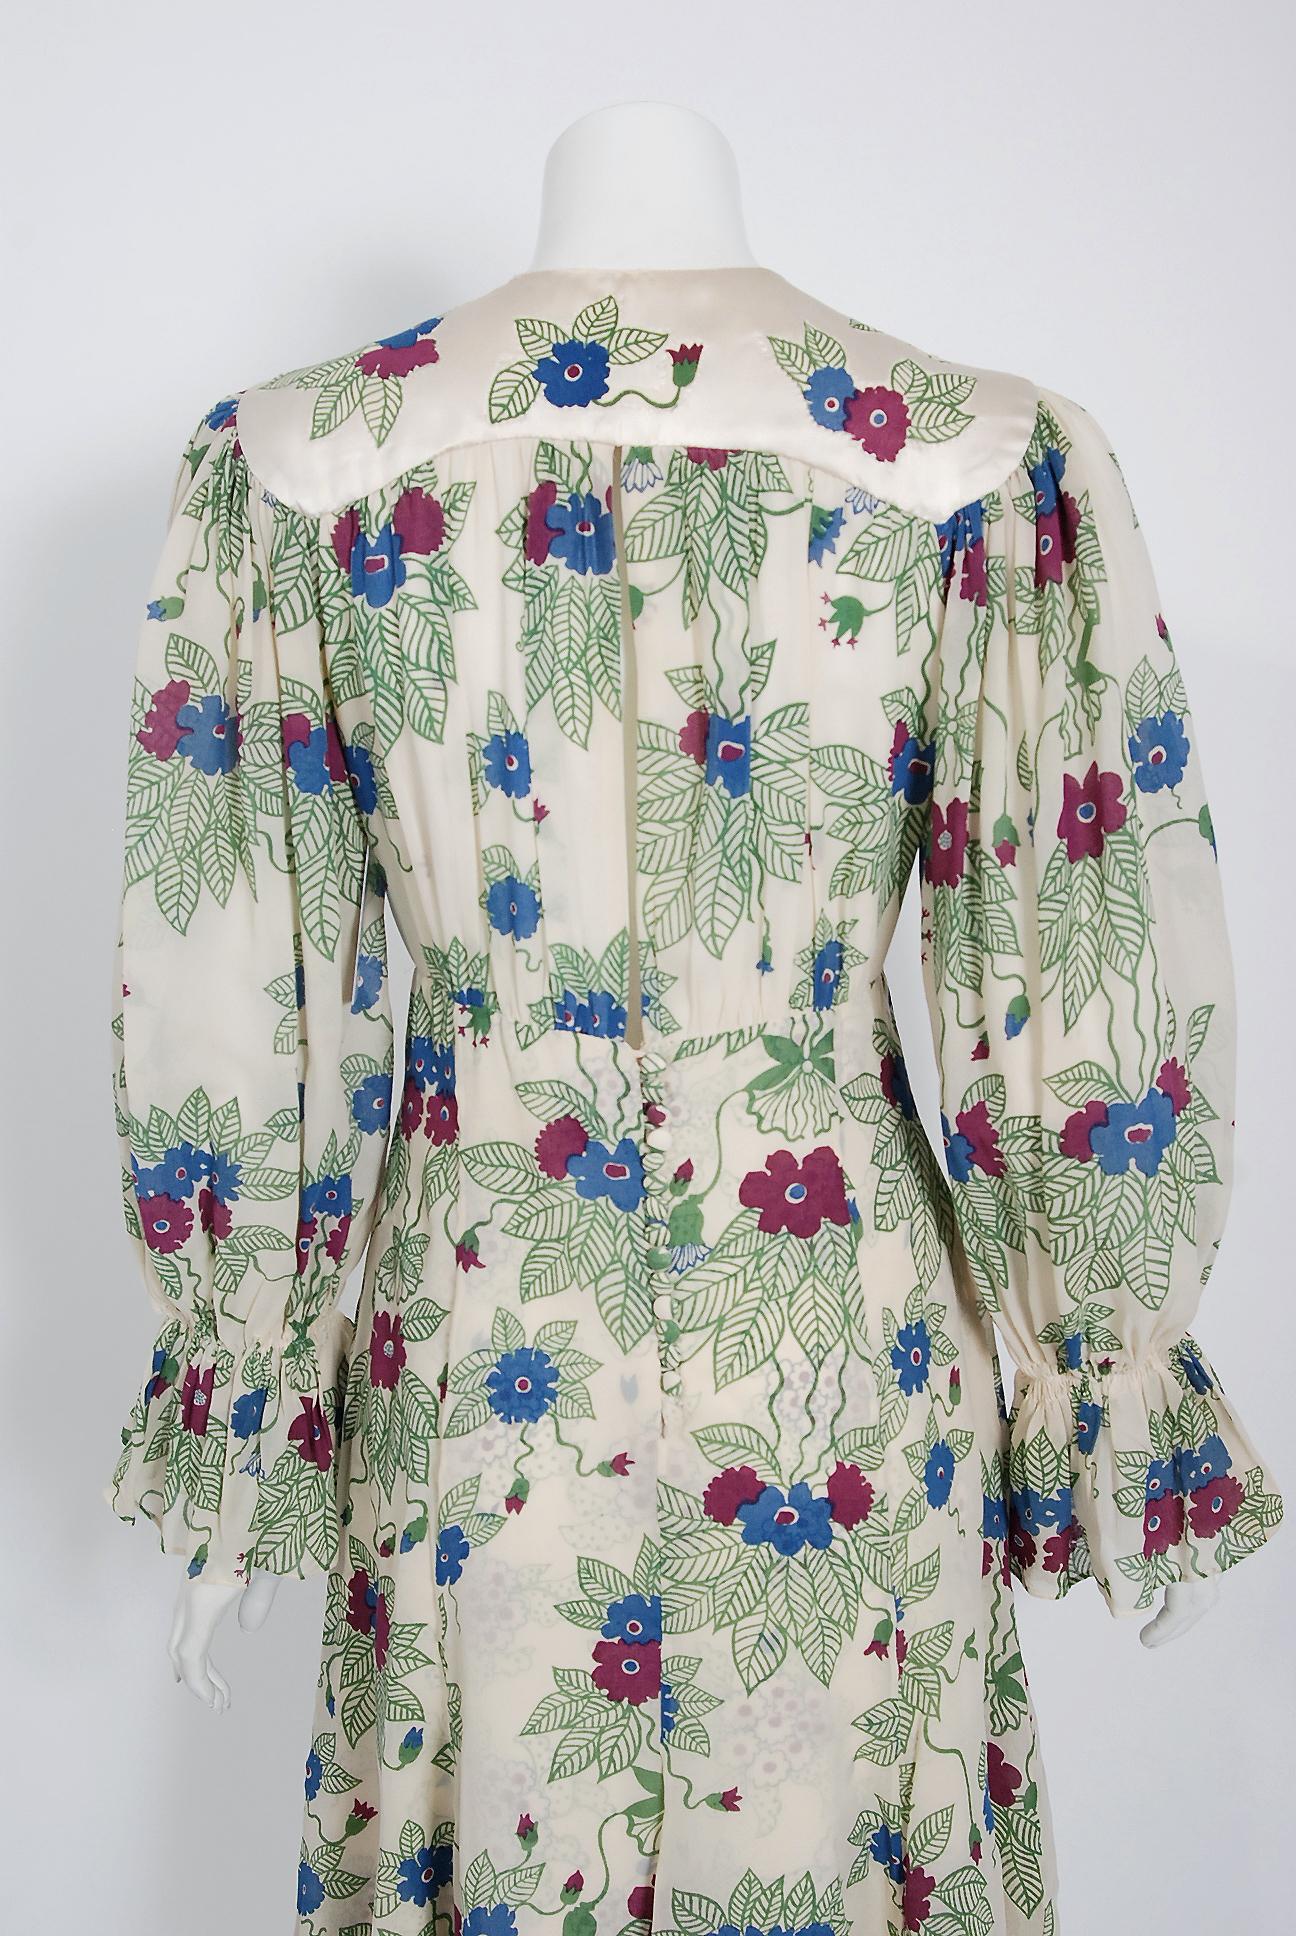 1973 Ossie Clark Couture Celia Birtwell Floral Print Tiered Silk Chiffon Dress 2